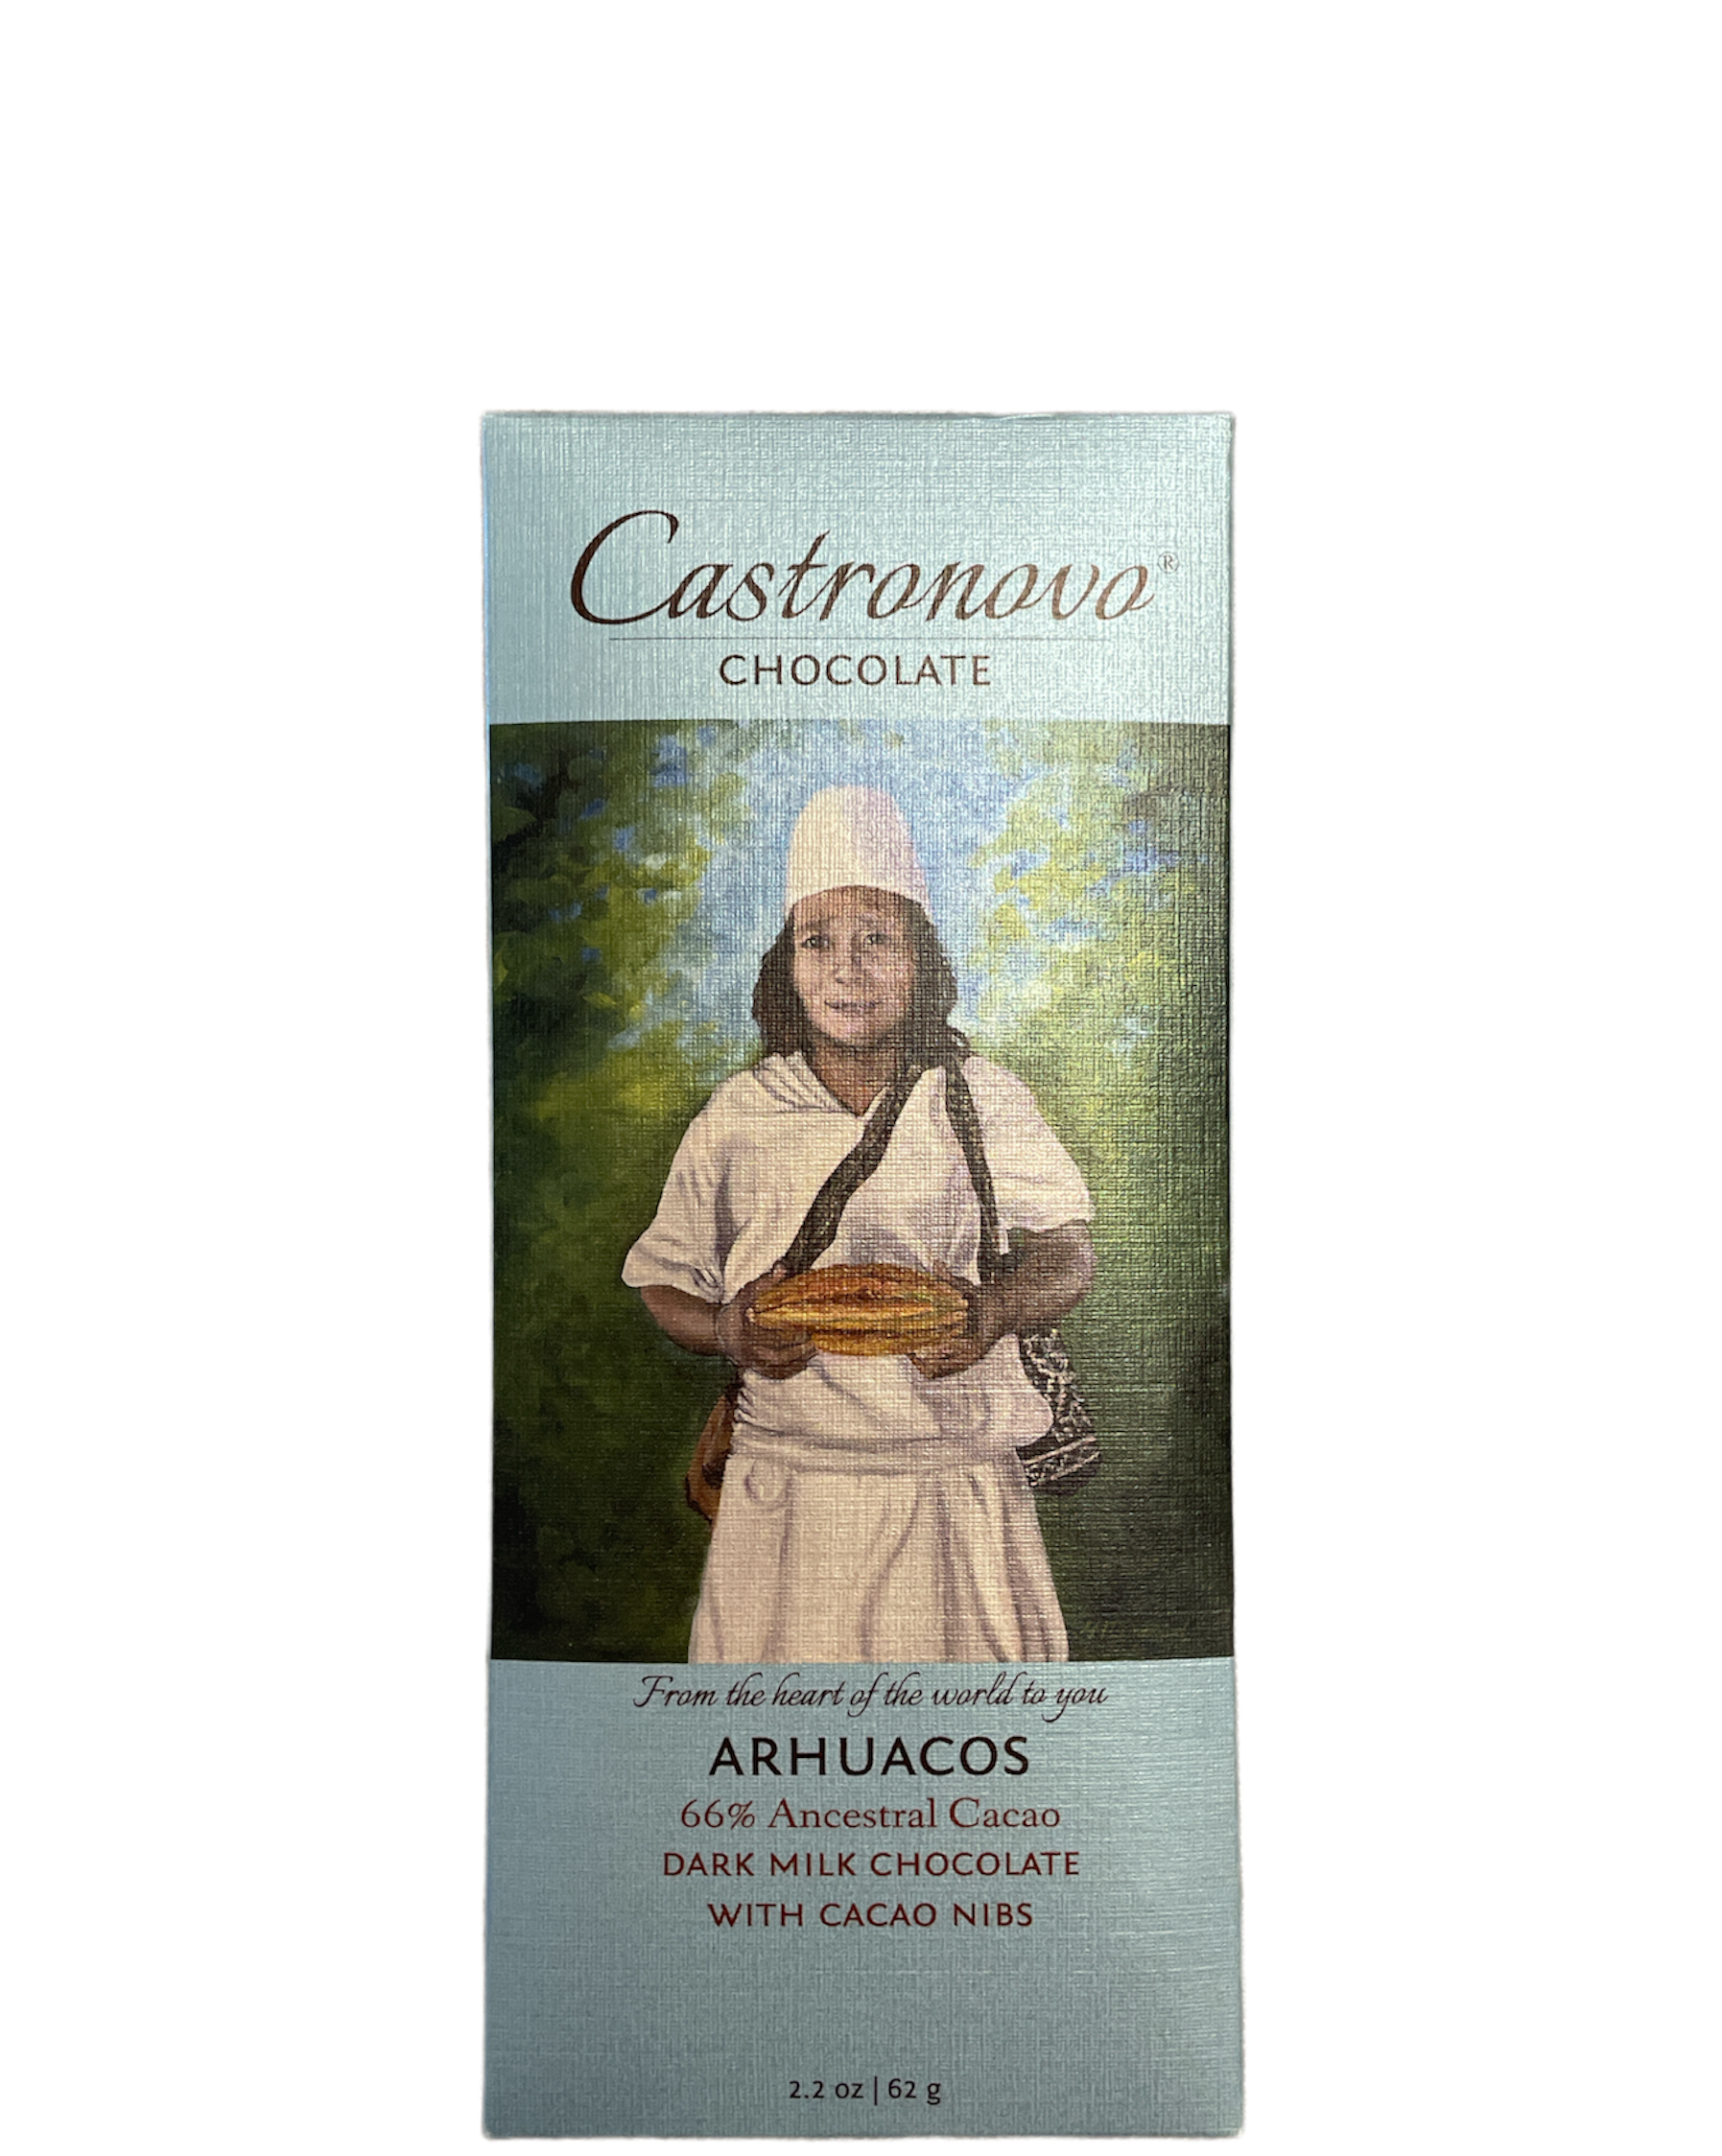 Dark Milk Chocolate Castronovo Arhuacos